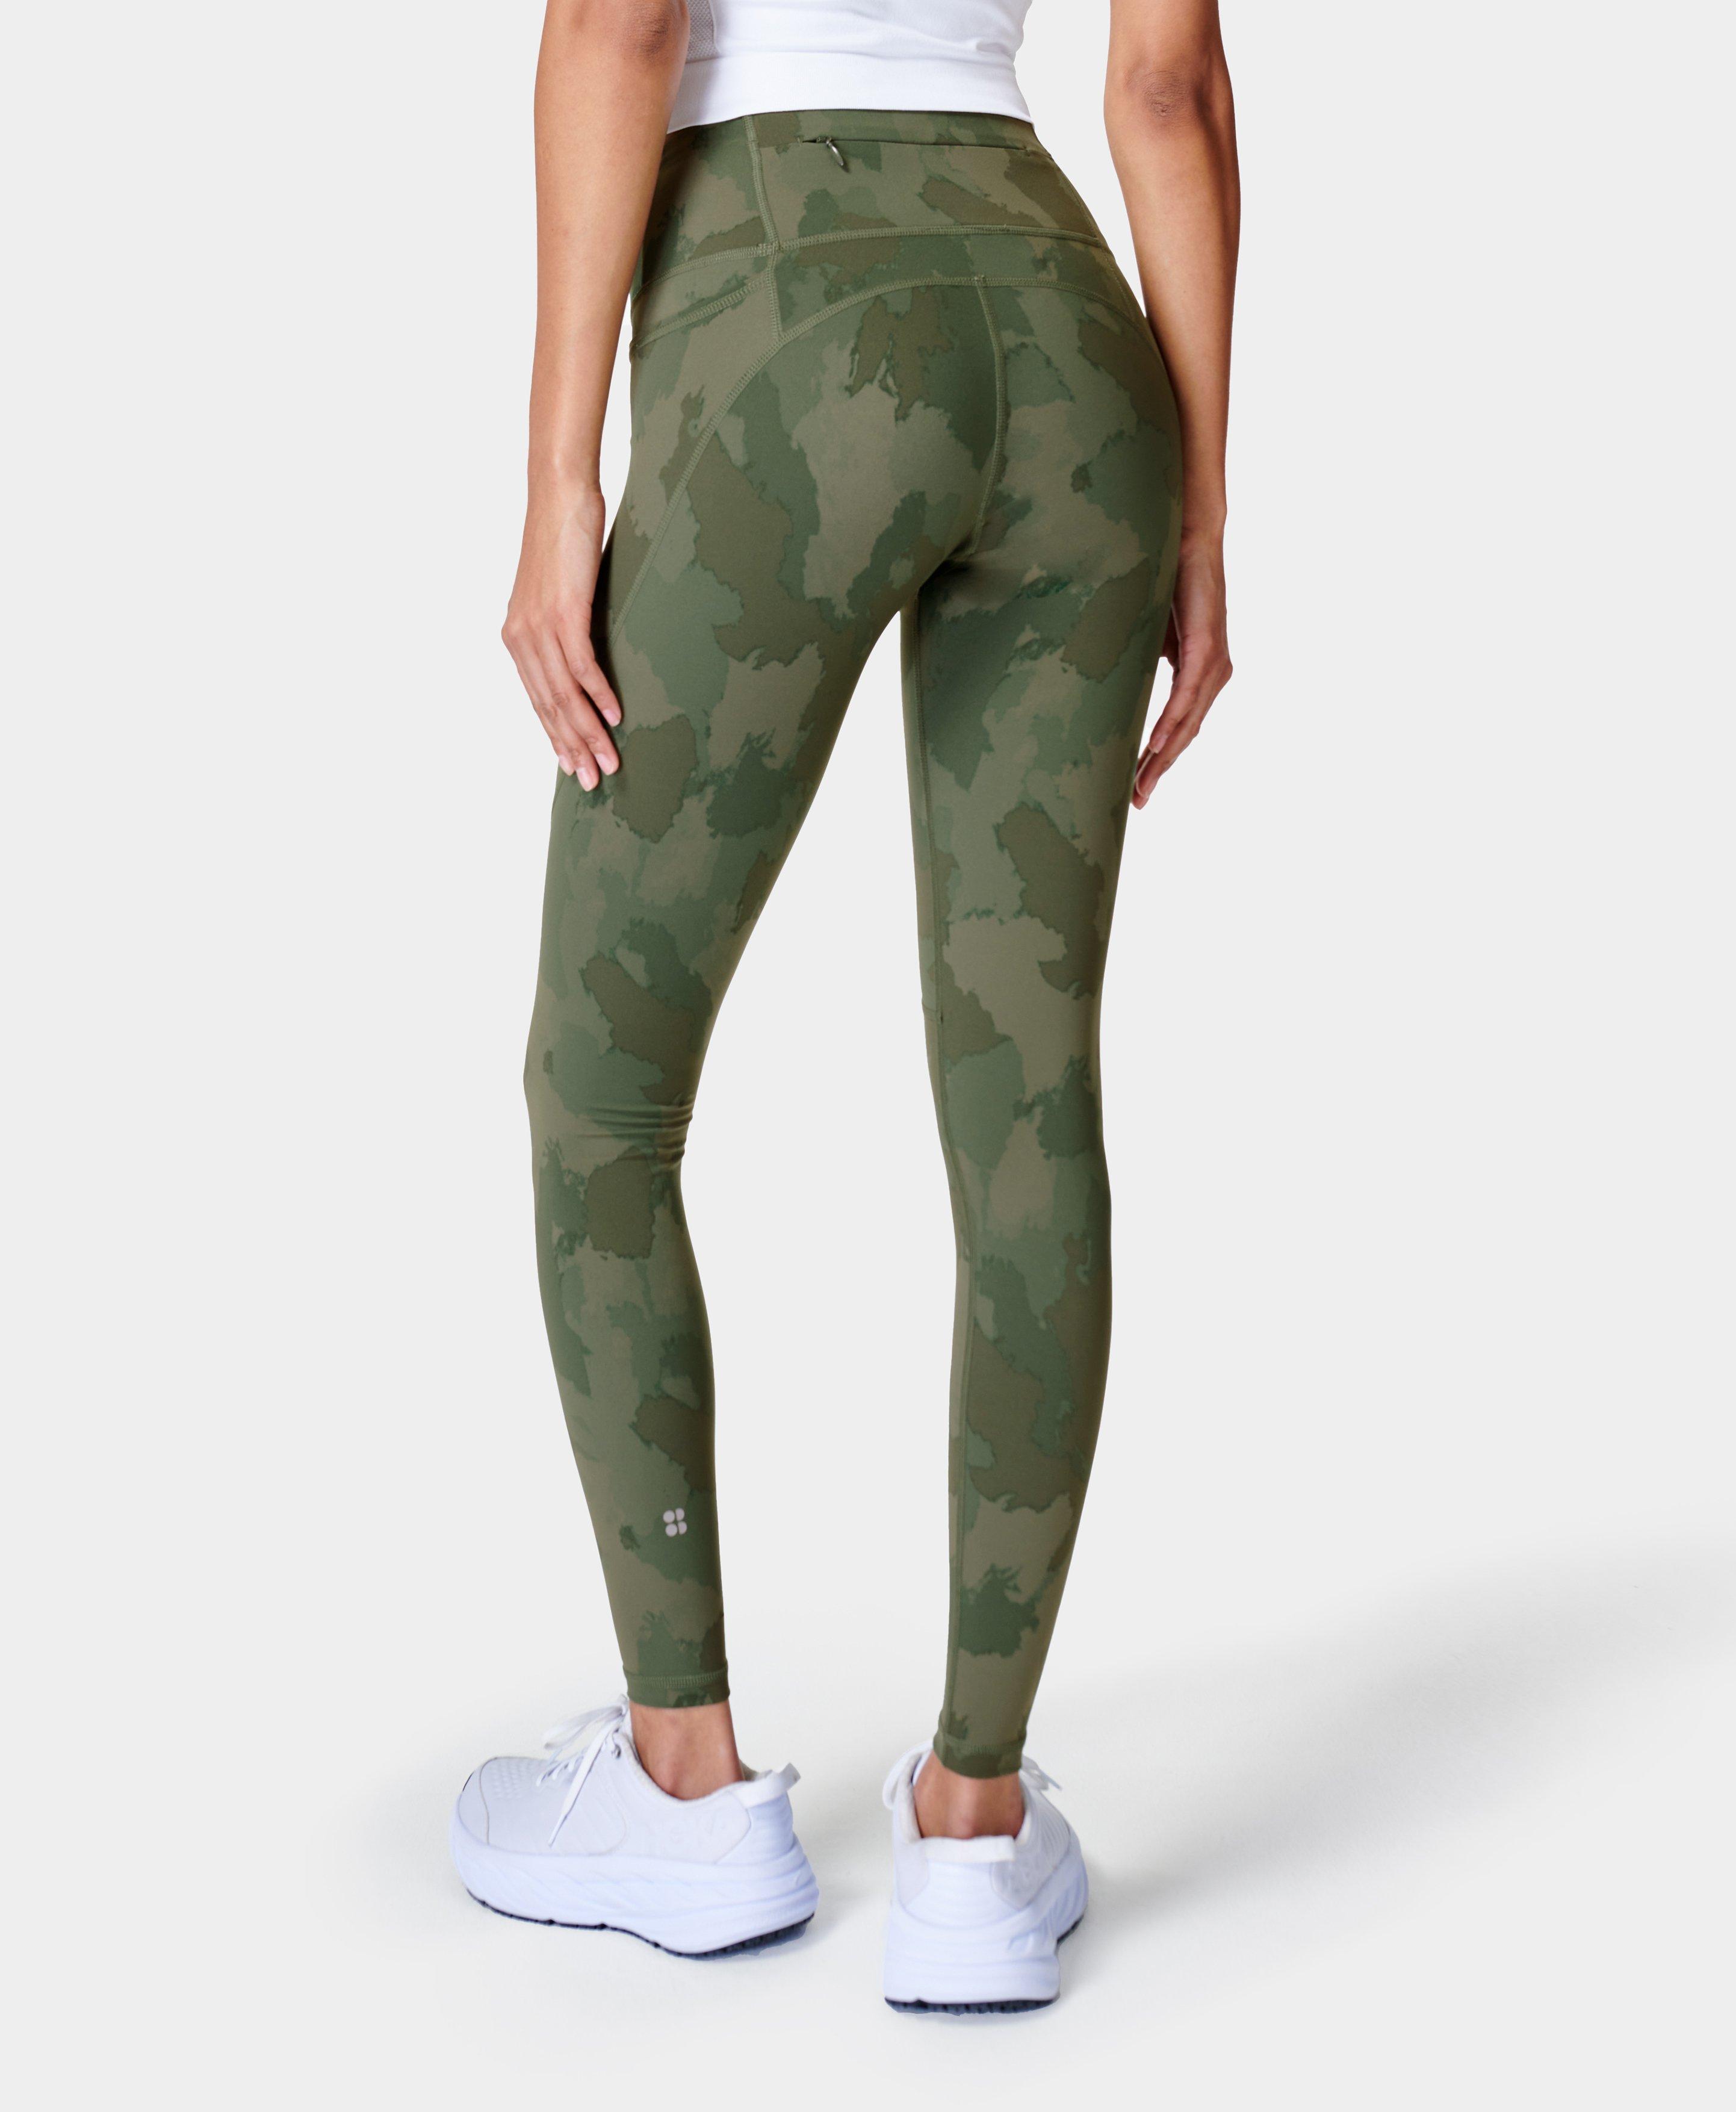 Power 7/8 Gym Leggings - Green Painted Camo Print